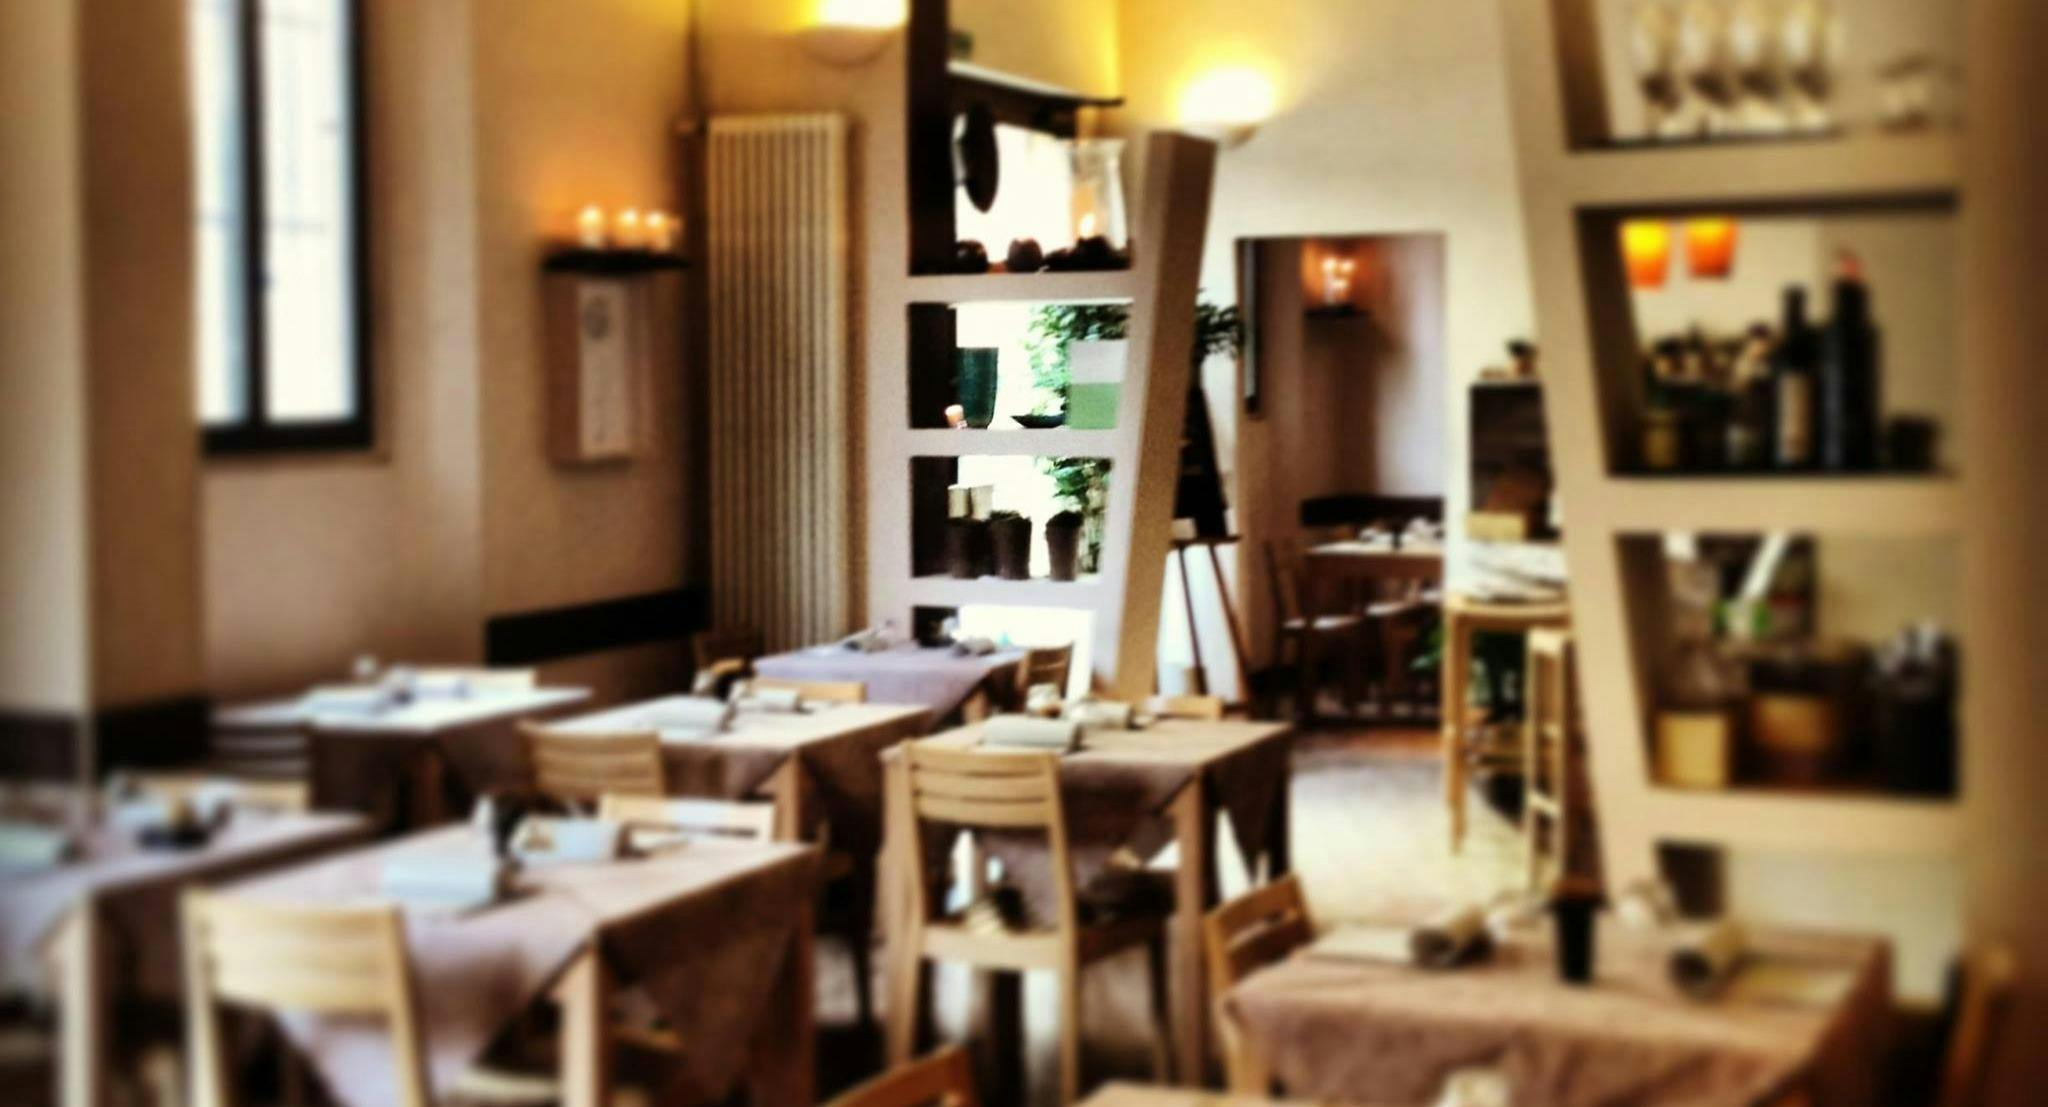 Photo of restaurant Zenzero in Porto, Bologna